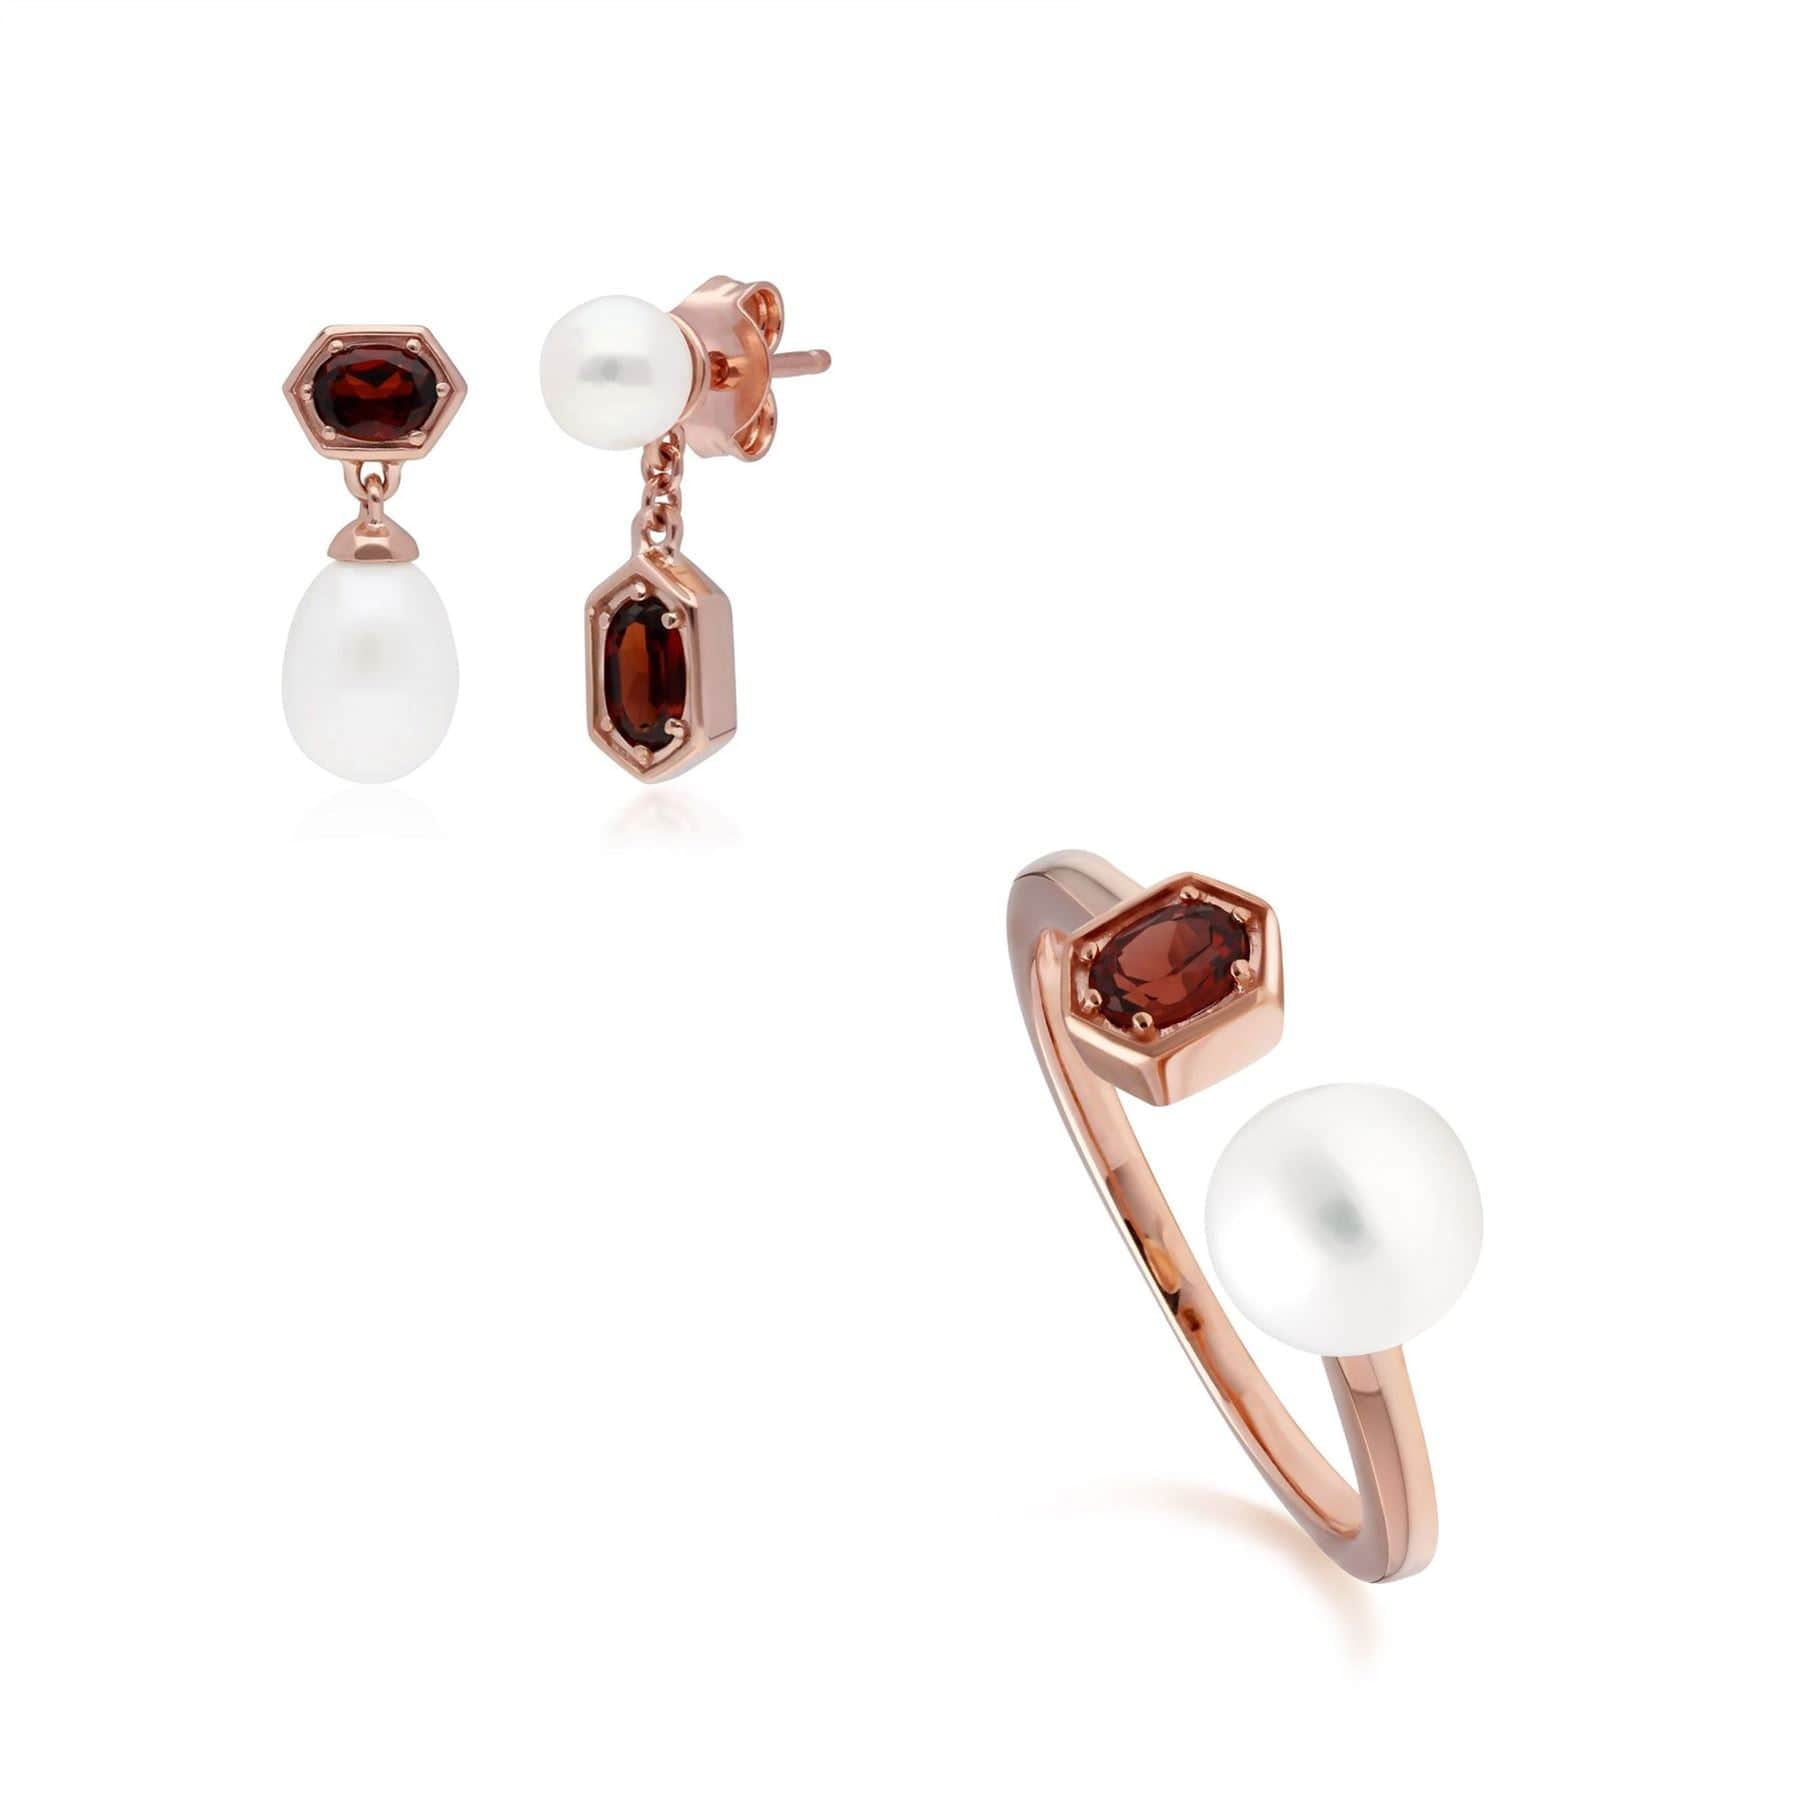 Modern Pearl & Garnet Earring & Ring Set in Rose Gold Plated Silver - Gemondo